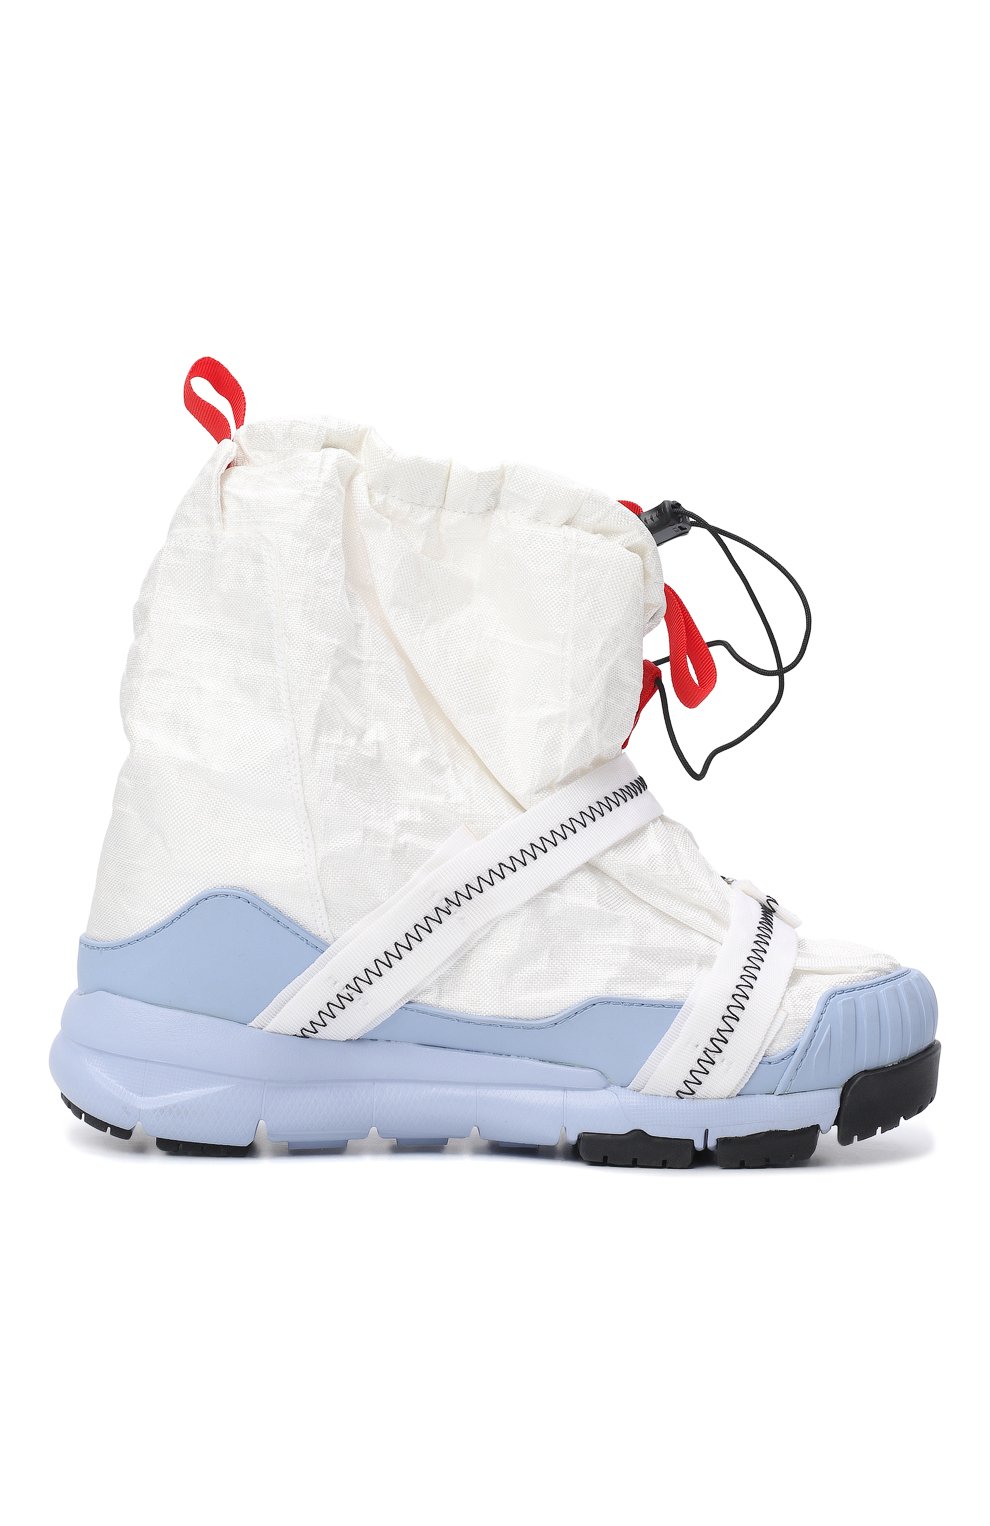 Ботинки Nike x Tom Sachs “Mars Yard Overshoe” | Nike | Разноцветный - 7